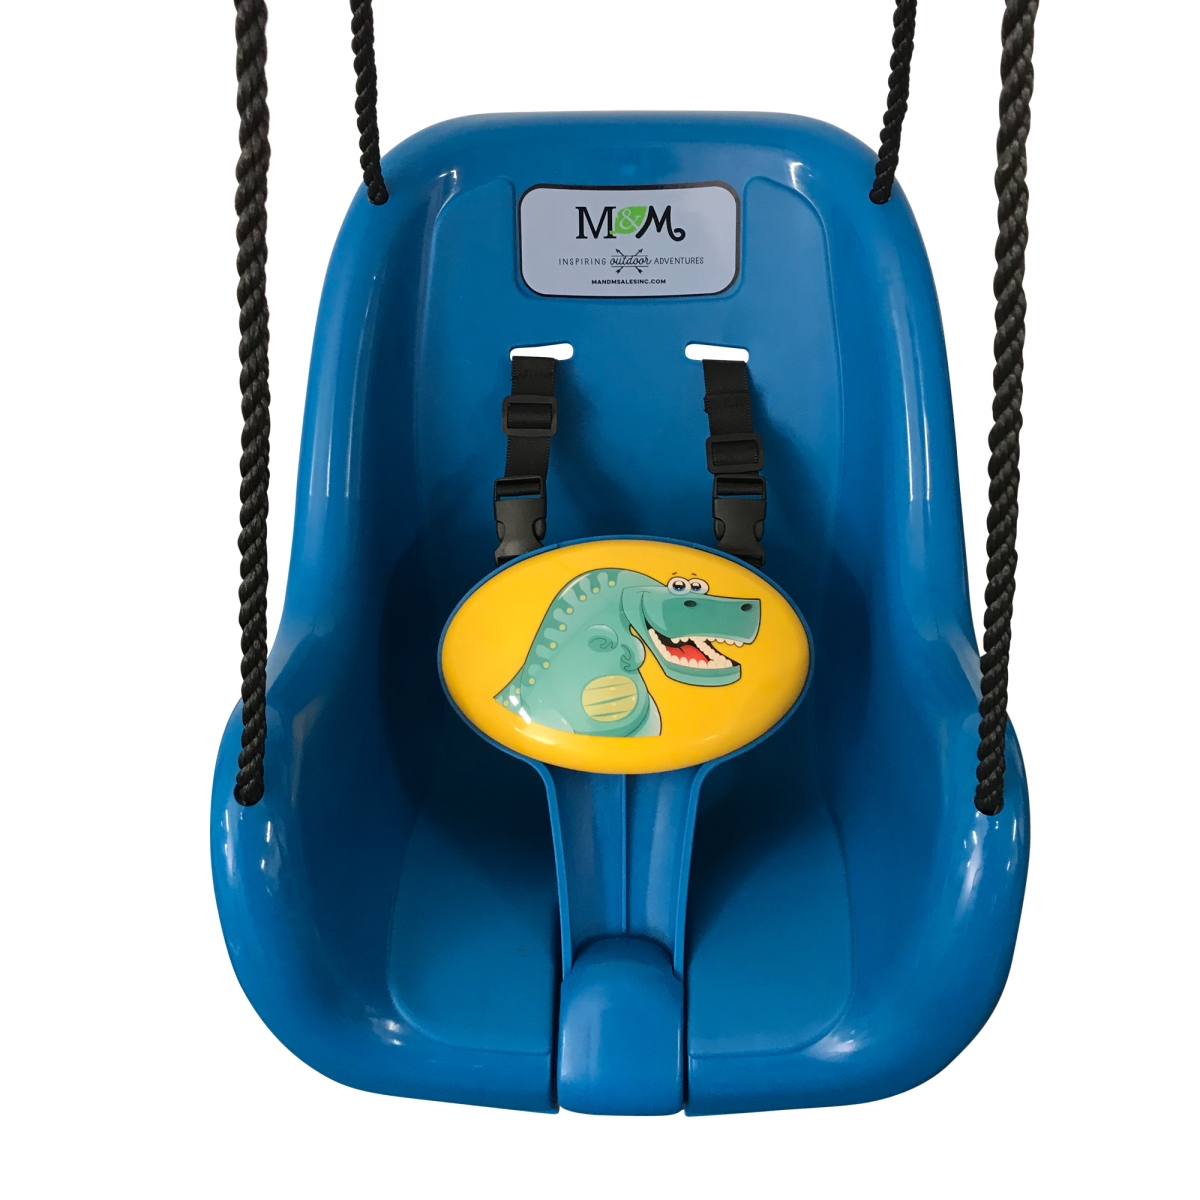 Mm00176 Dinosaur Toddler Swing